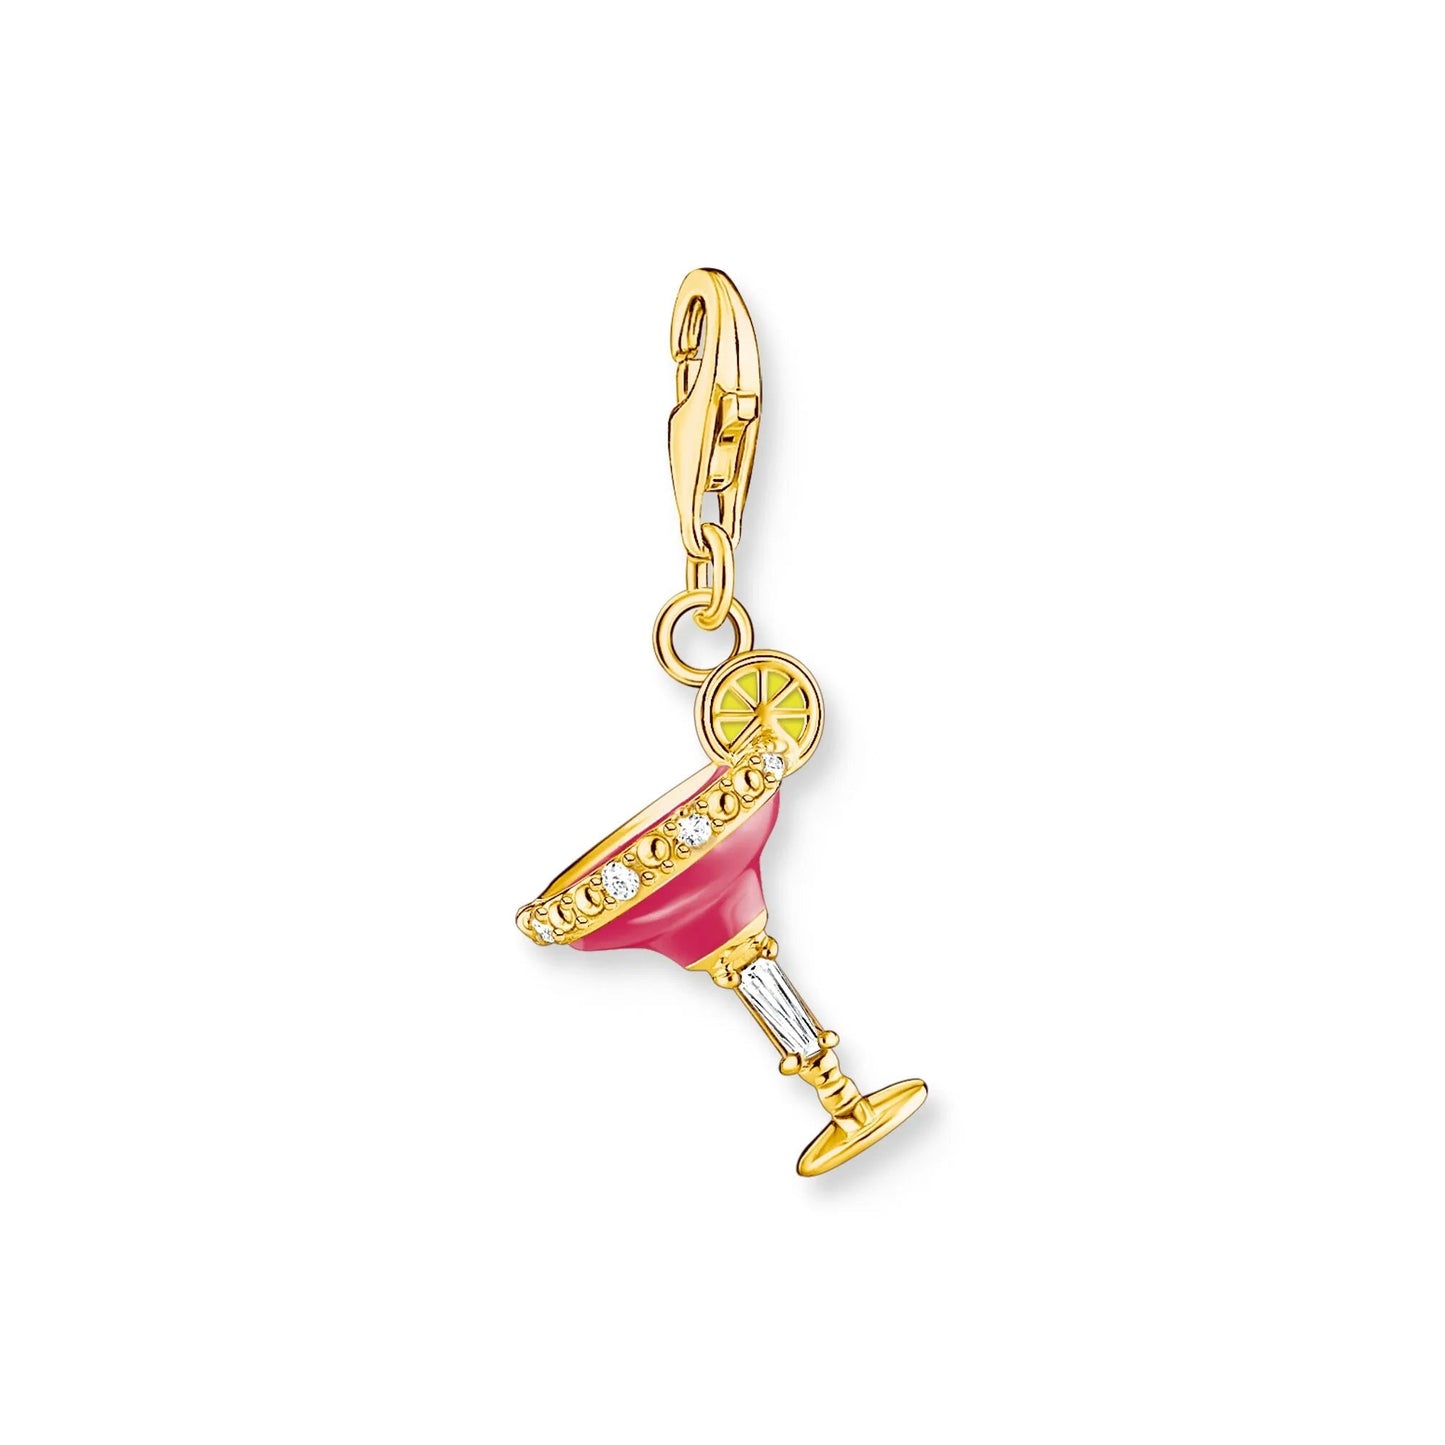 THOMAS SABO Charm Pendant Pink Cocktail Glass Gold